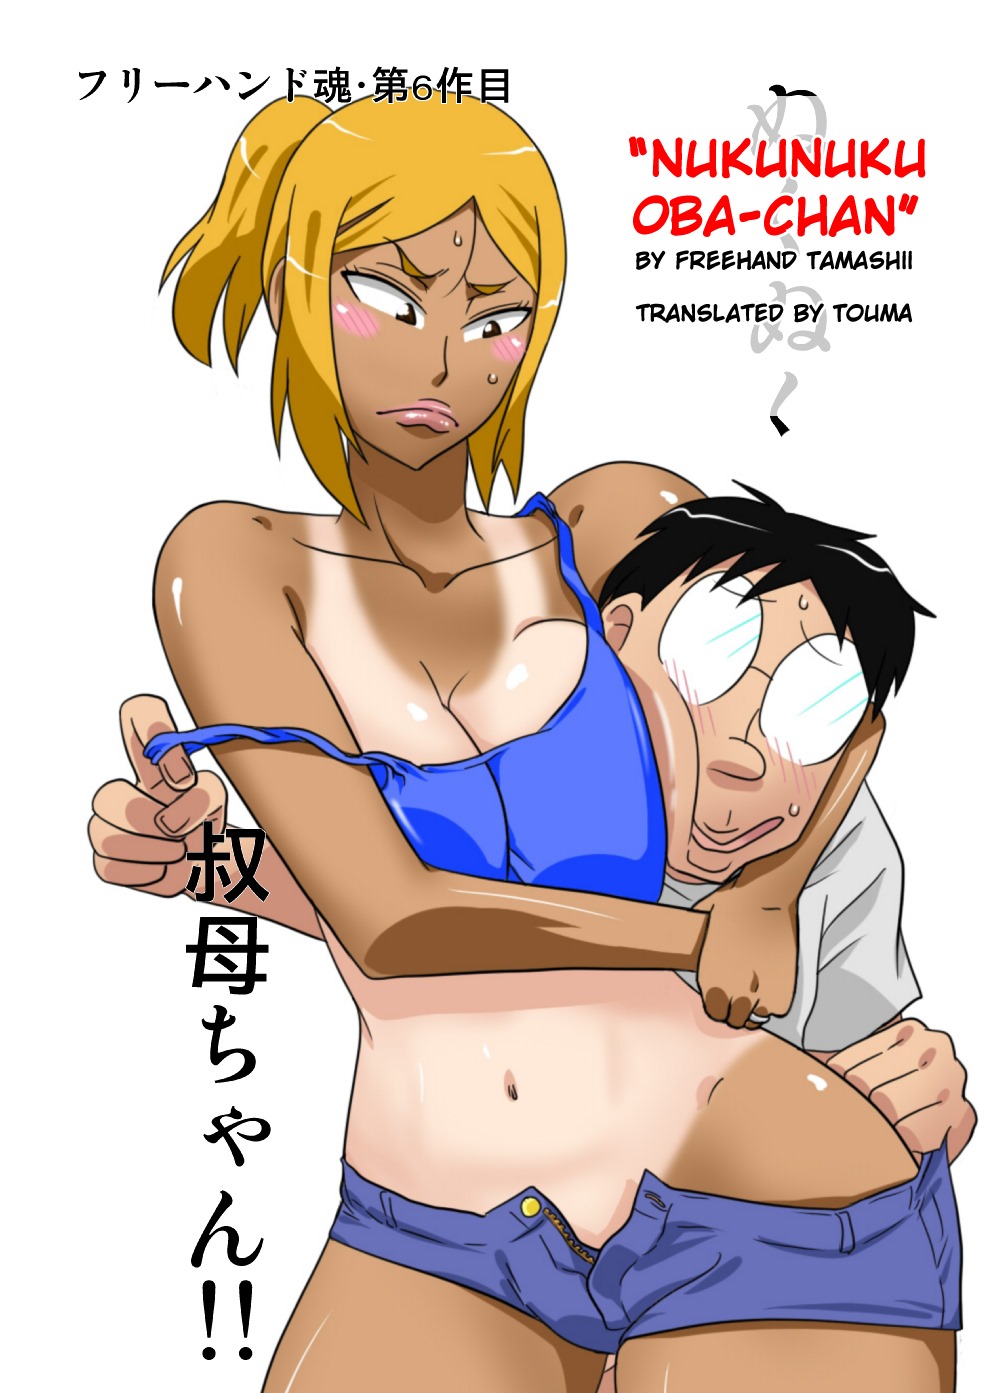 Porn Comics - NukuNuku- Freehand Tamashii porn comics 8 muses